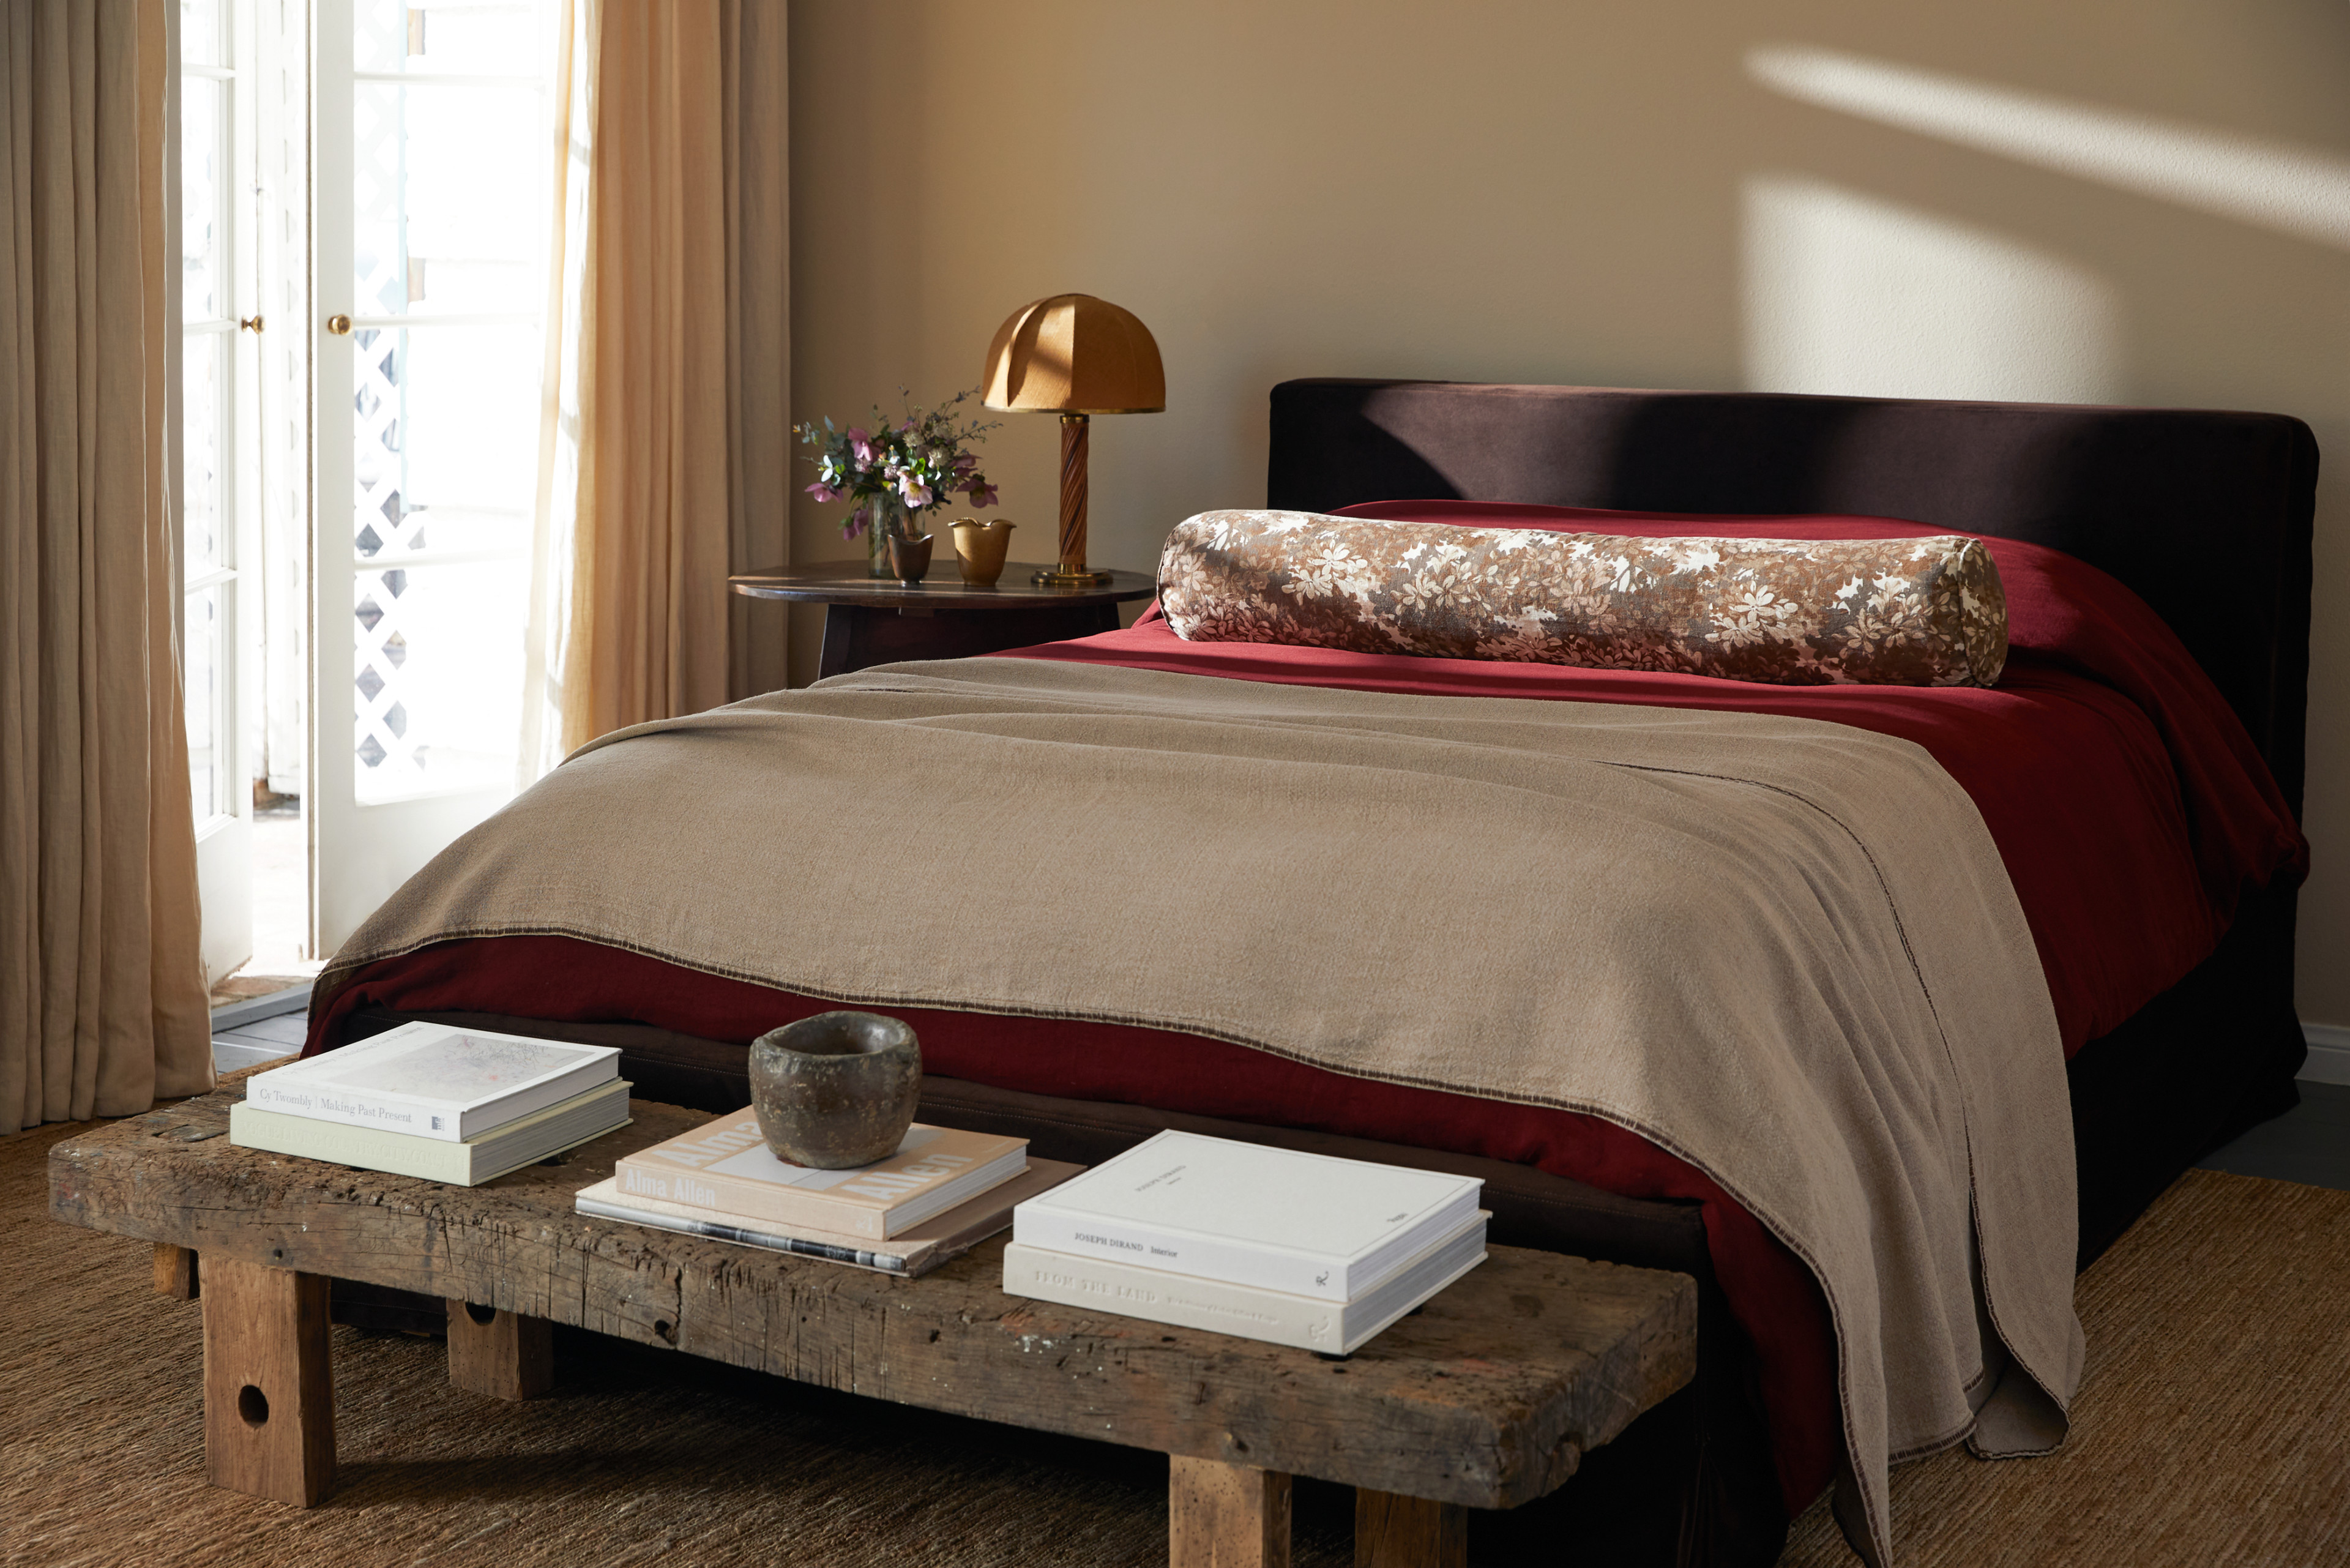 Bedroom sheet set and bolster pillow